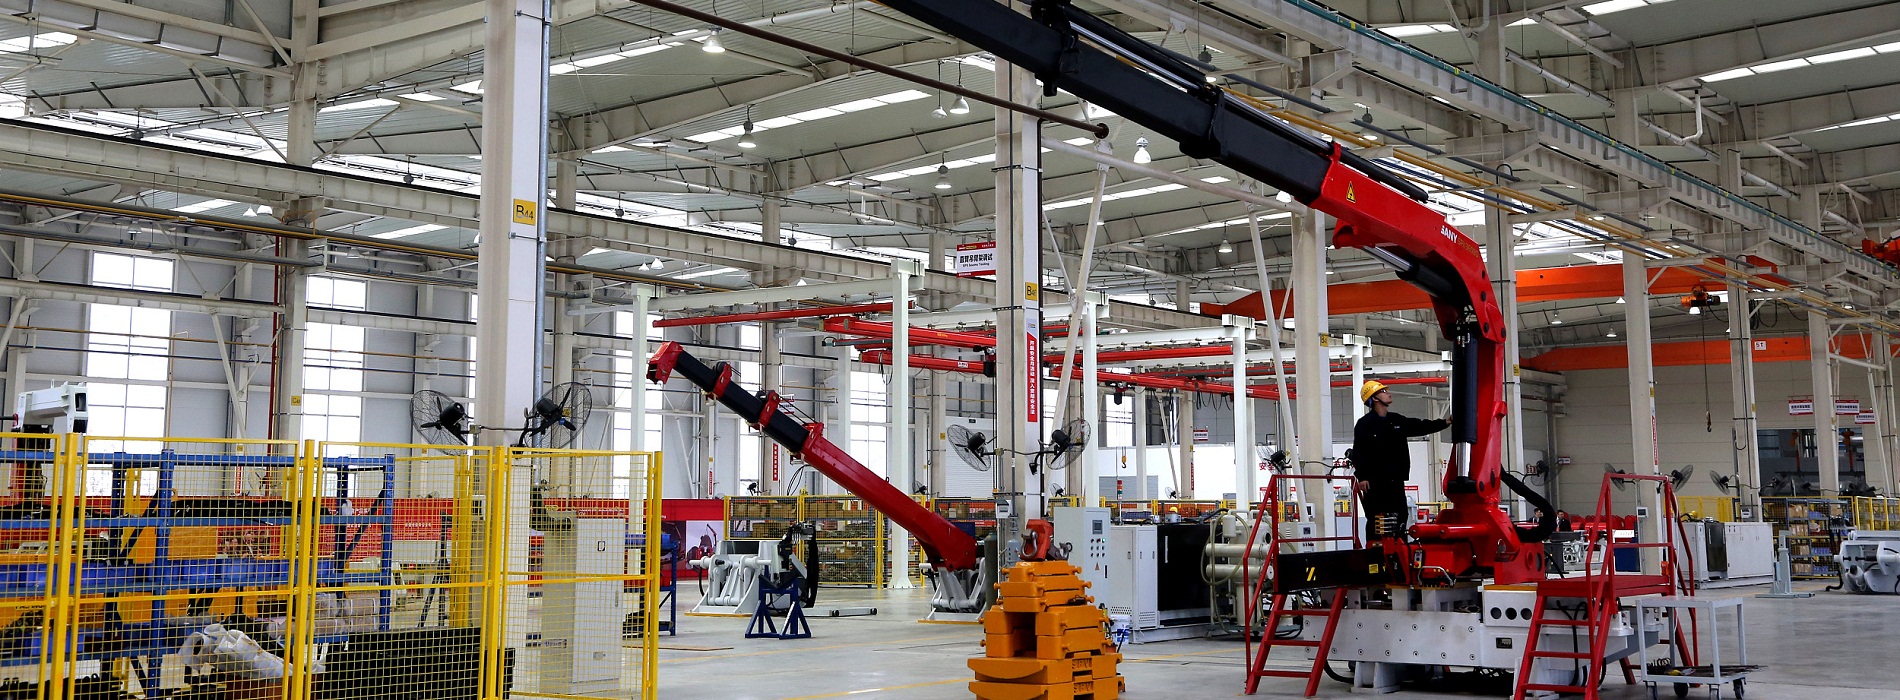 Rudong Economic Development Zone achieves rapid industrial growth